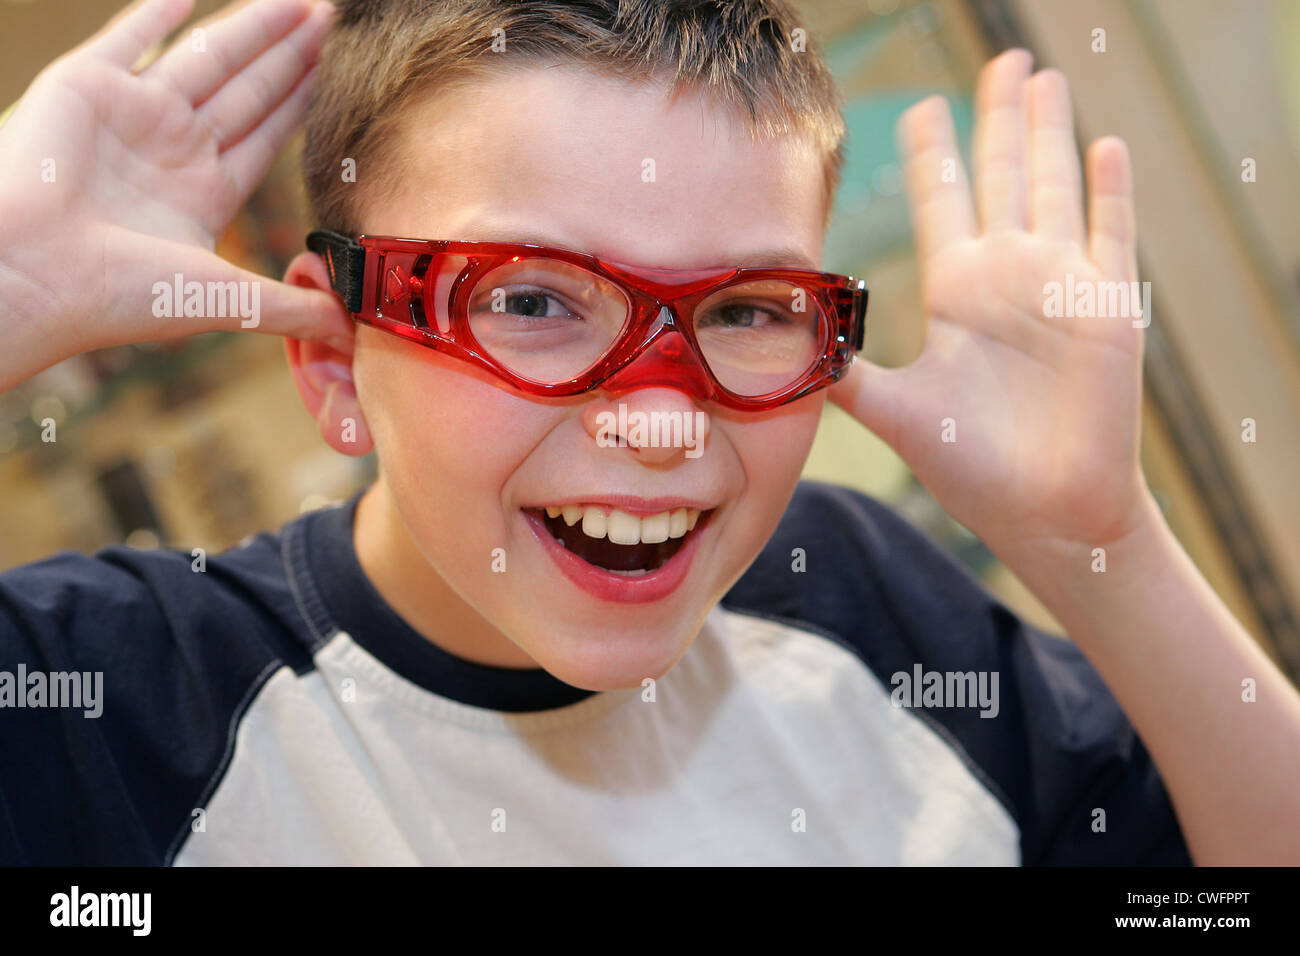 Child with sports eyewear Stock Photo